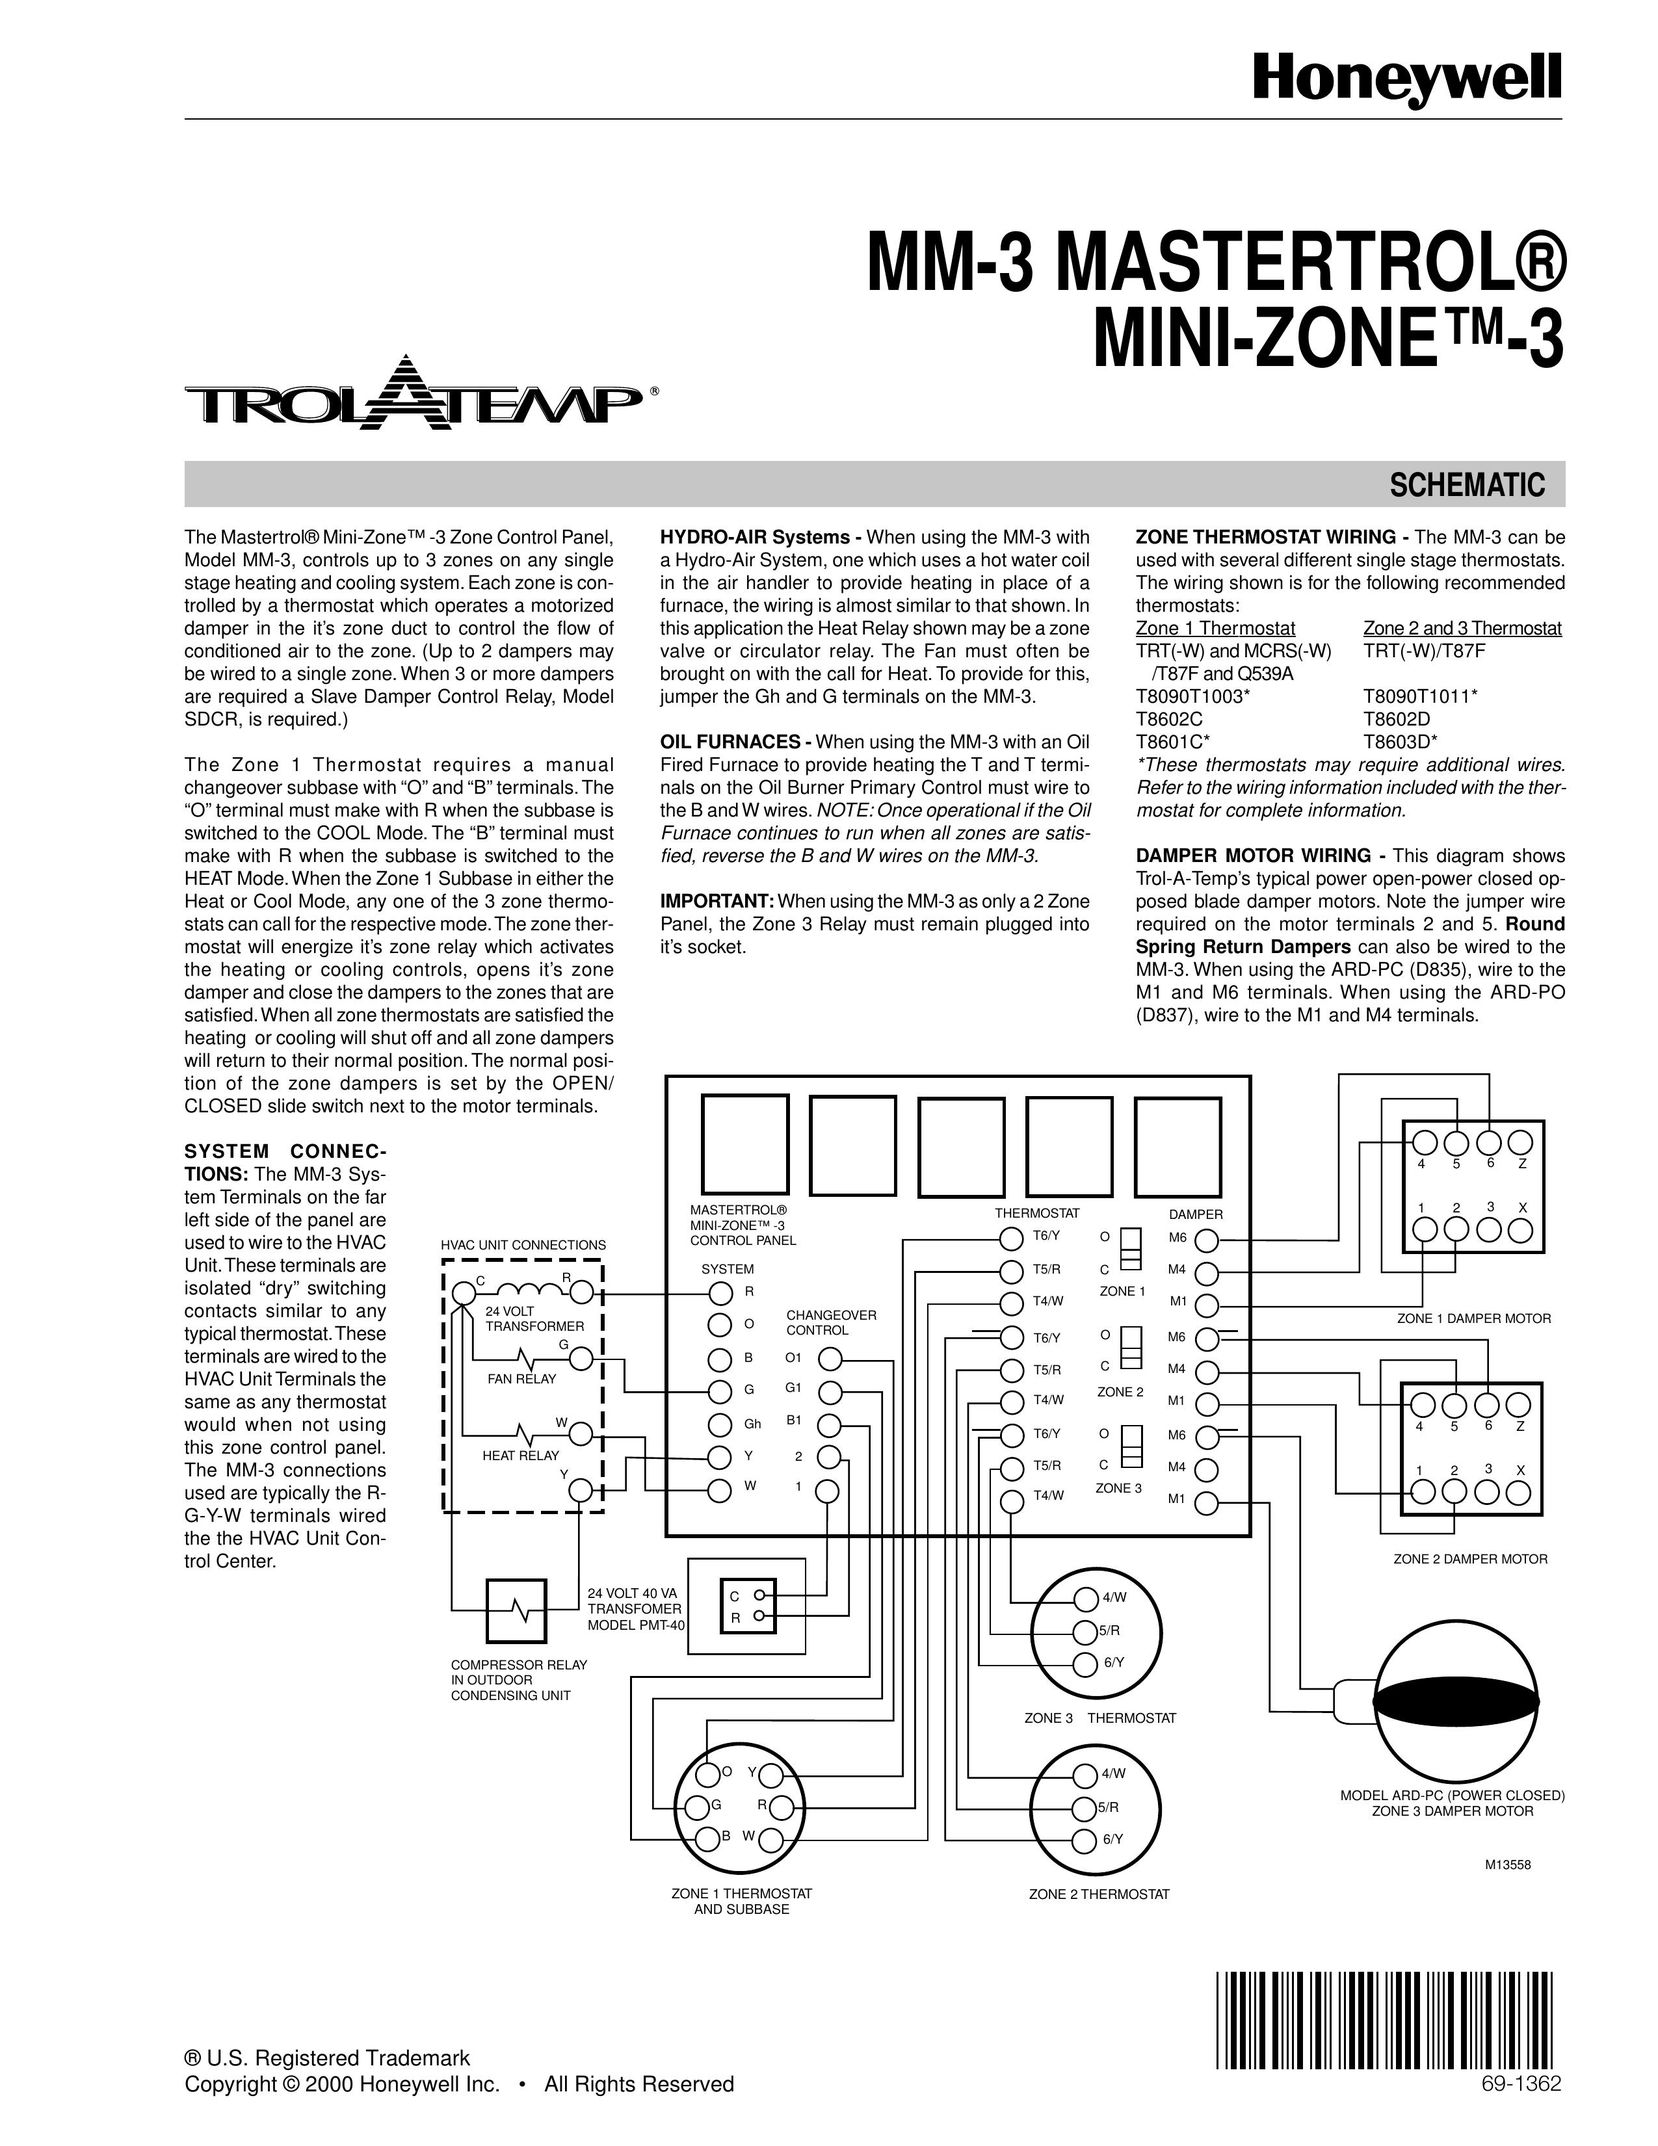 Honeywell MM-3 Air Conditioner User Manual